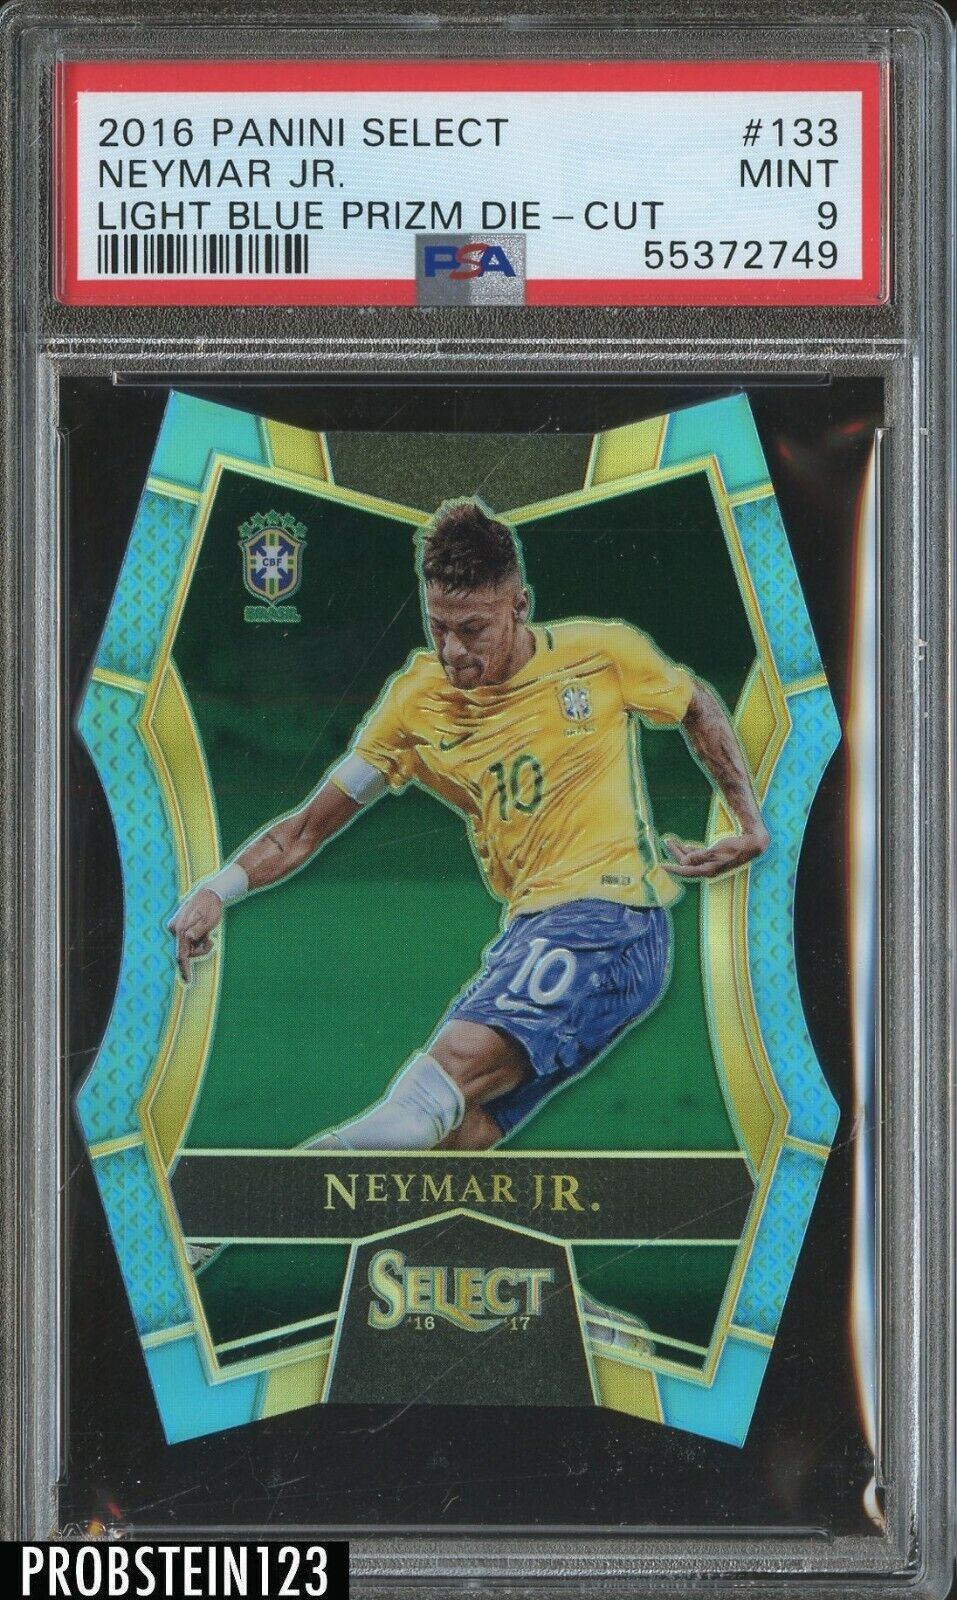 2016-17 Panini Select Soccer Light Blue Die-Cut Prizm #133 Neymar Jr. /249 PSA 9